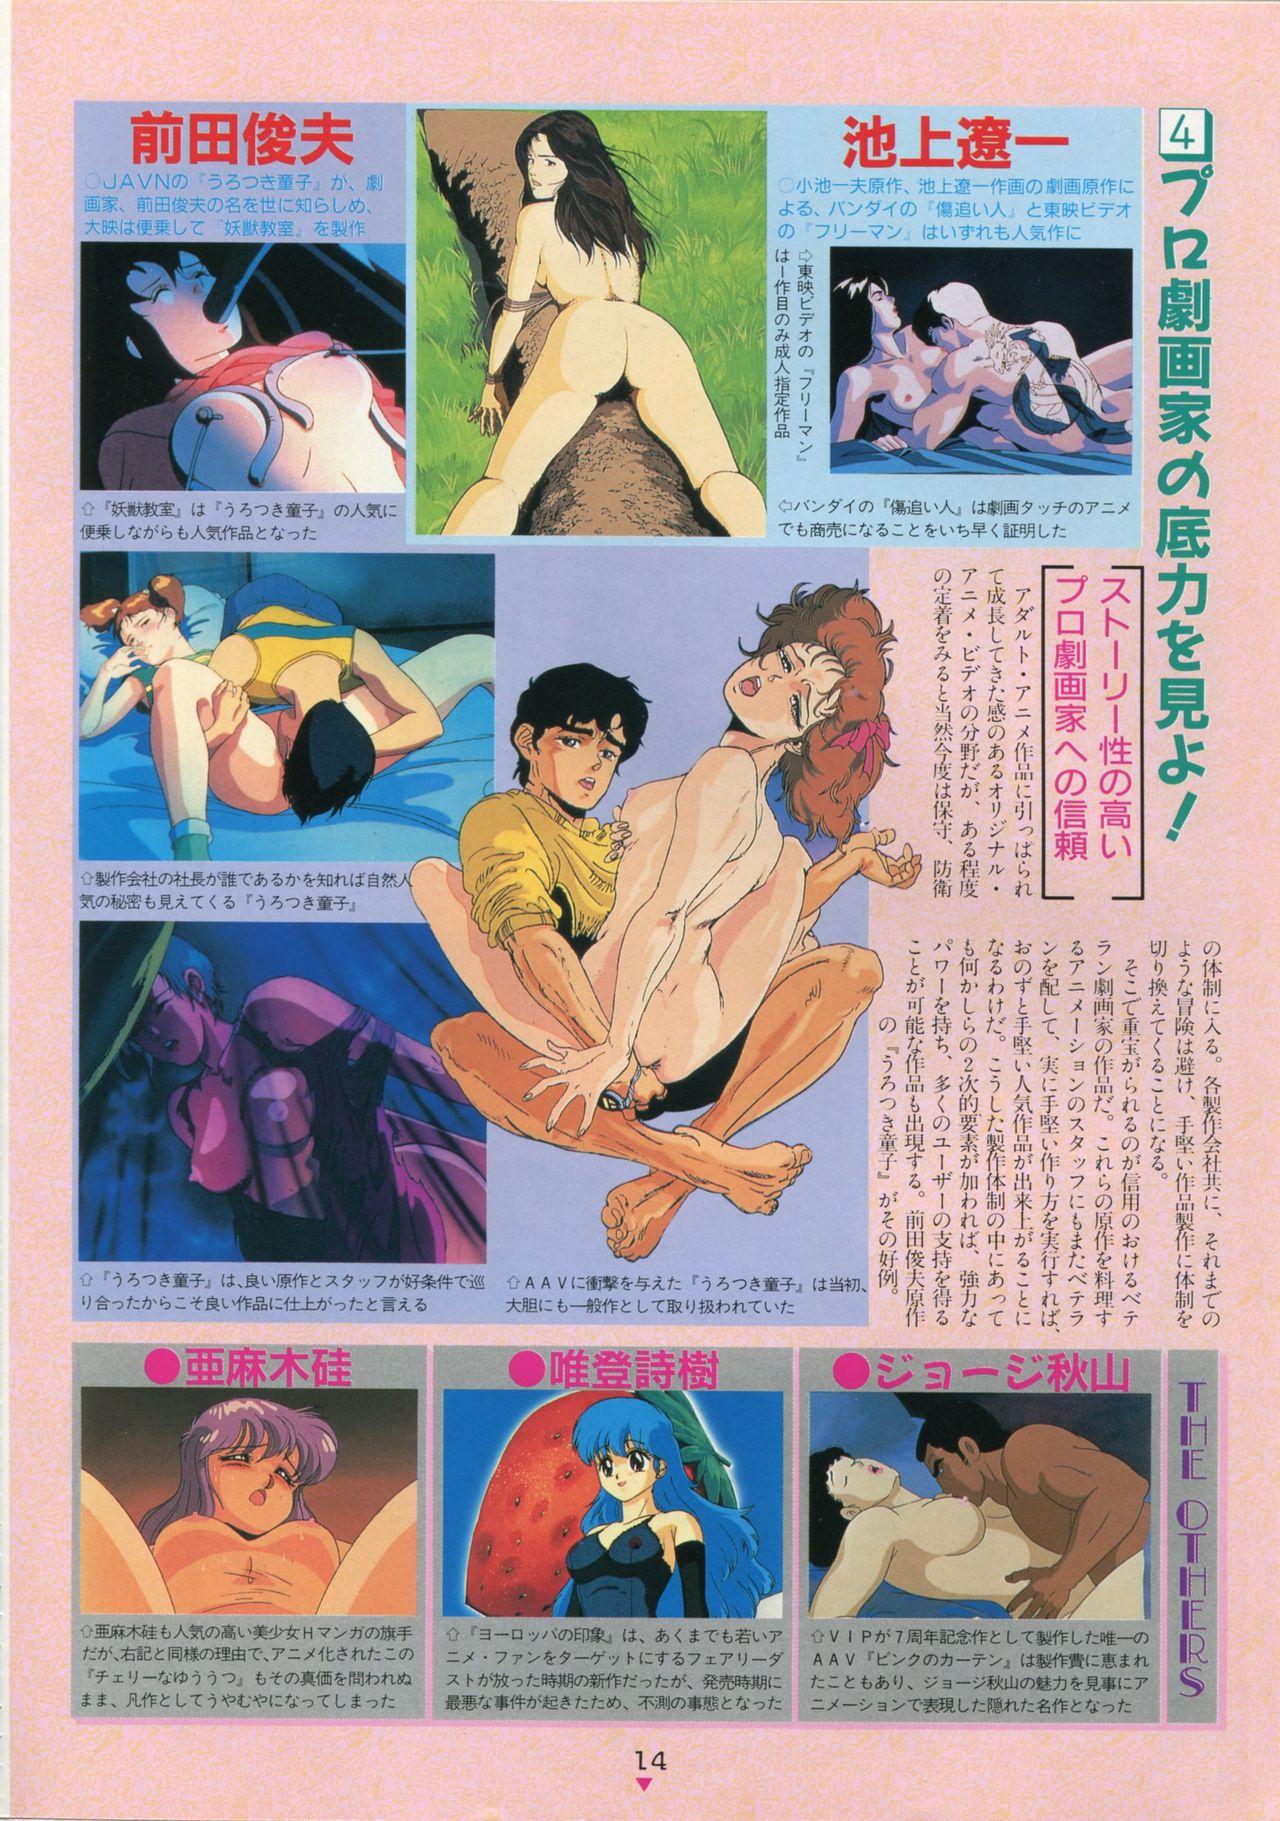 Bishoujo Anime Daizenshuu - Adult Animation Video Catalog 1991 9